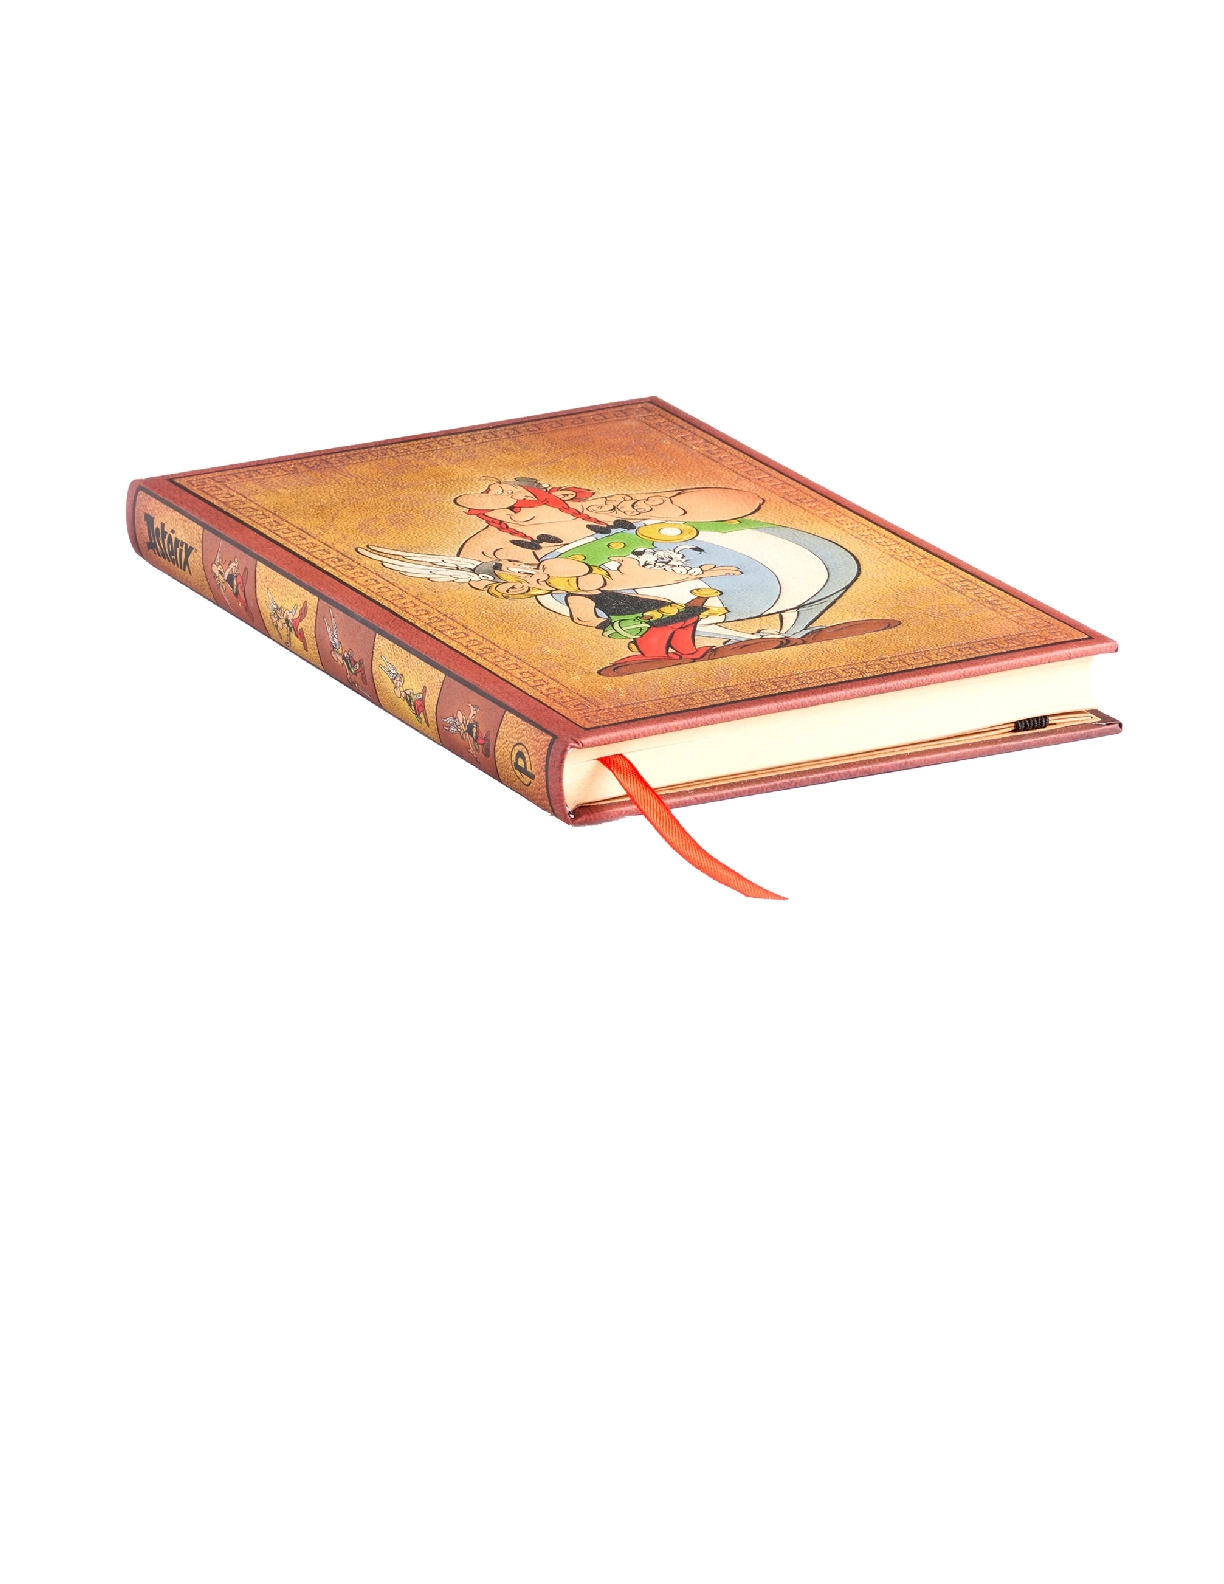 Asterix & Obelix, The Adventures of Asterix, Hardcover Journals, Midi, Unlined, Elastic Band, 144 Pg, 120 GSM